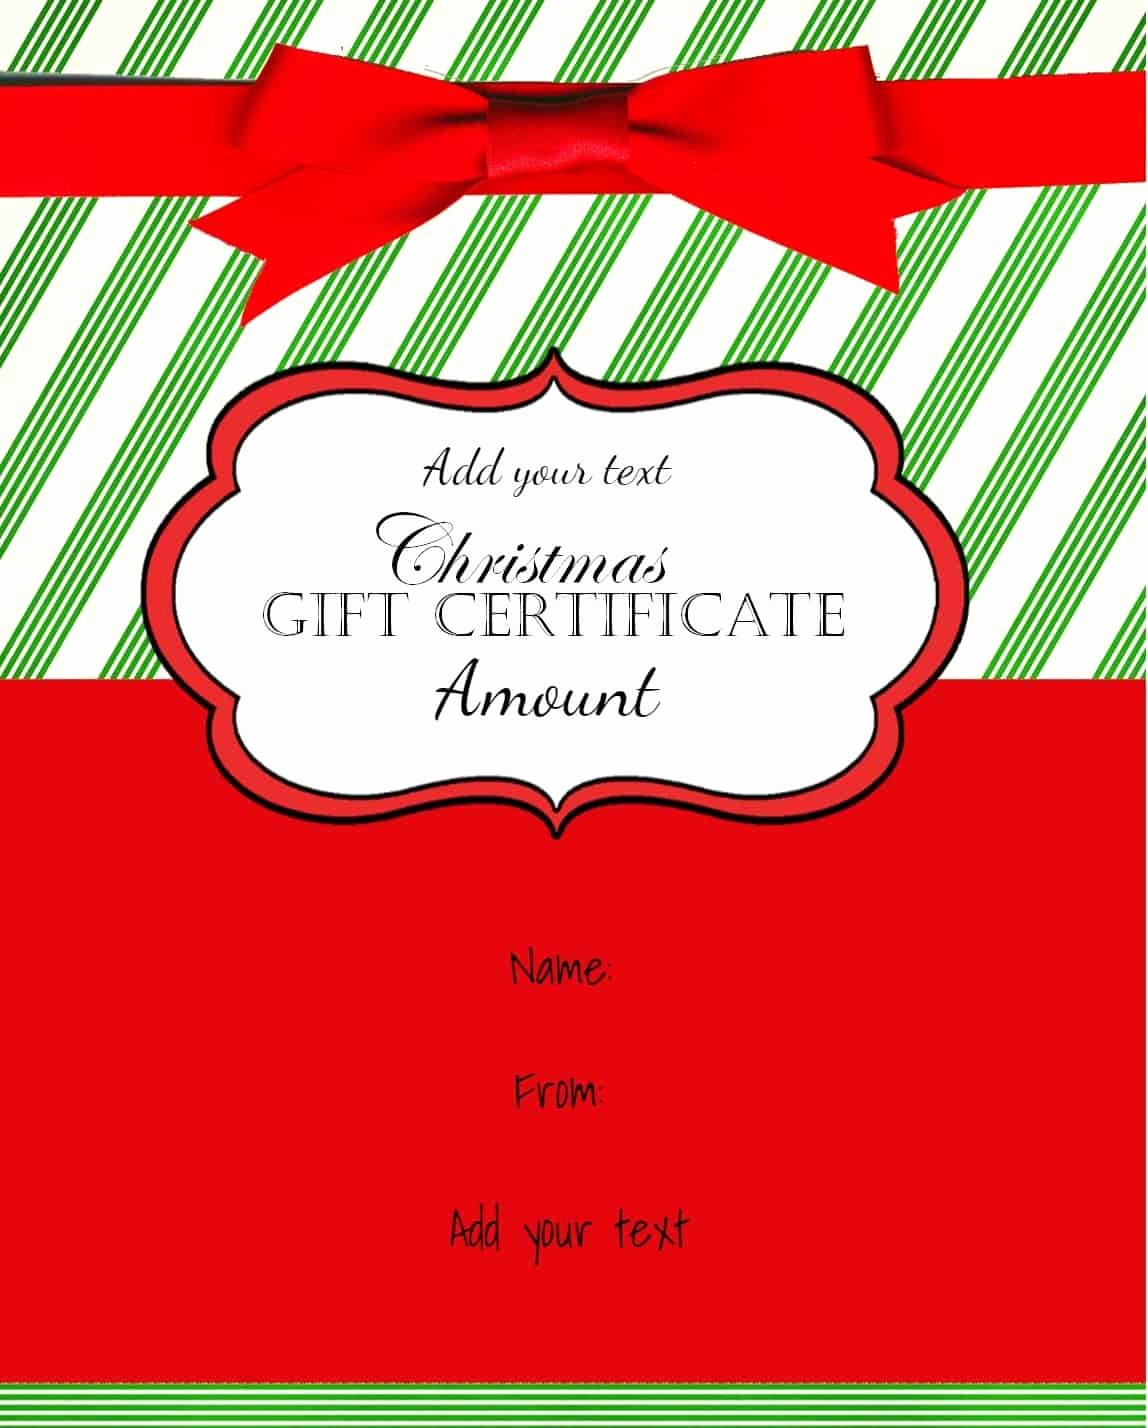 Gift Certificate Template Christmas Beautiful Free Christmas Gift Certificate Template